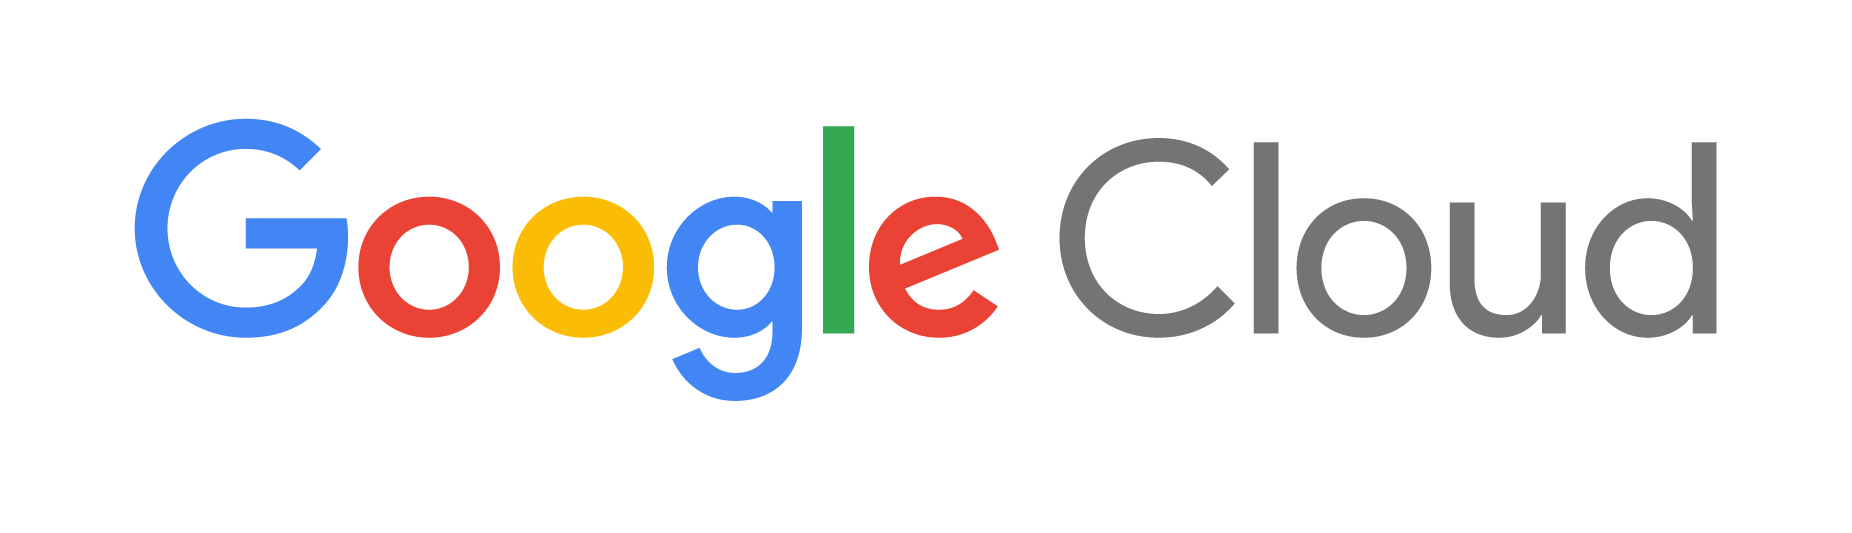 गूगल